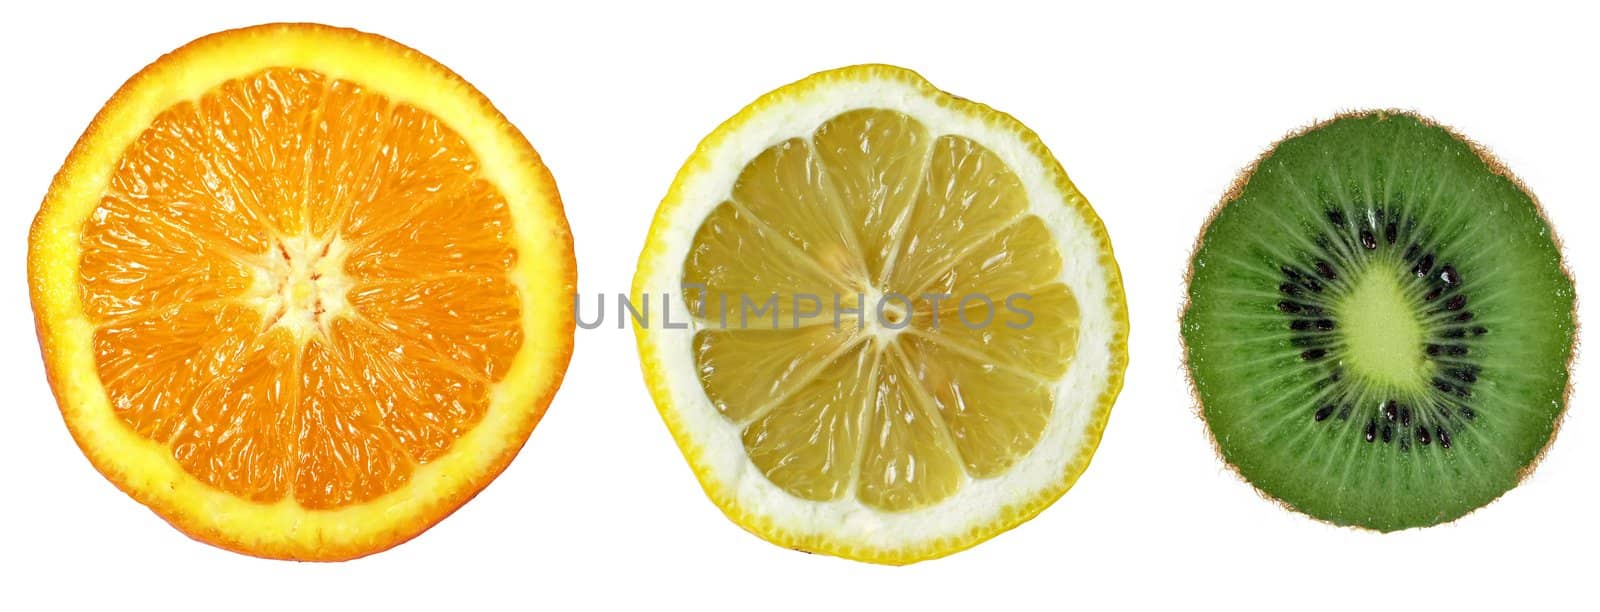 Three fruits: Orange, Lemon, Kiwi by adamr